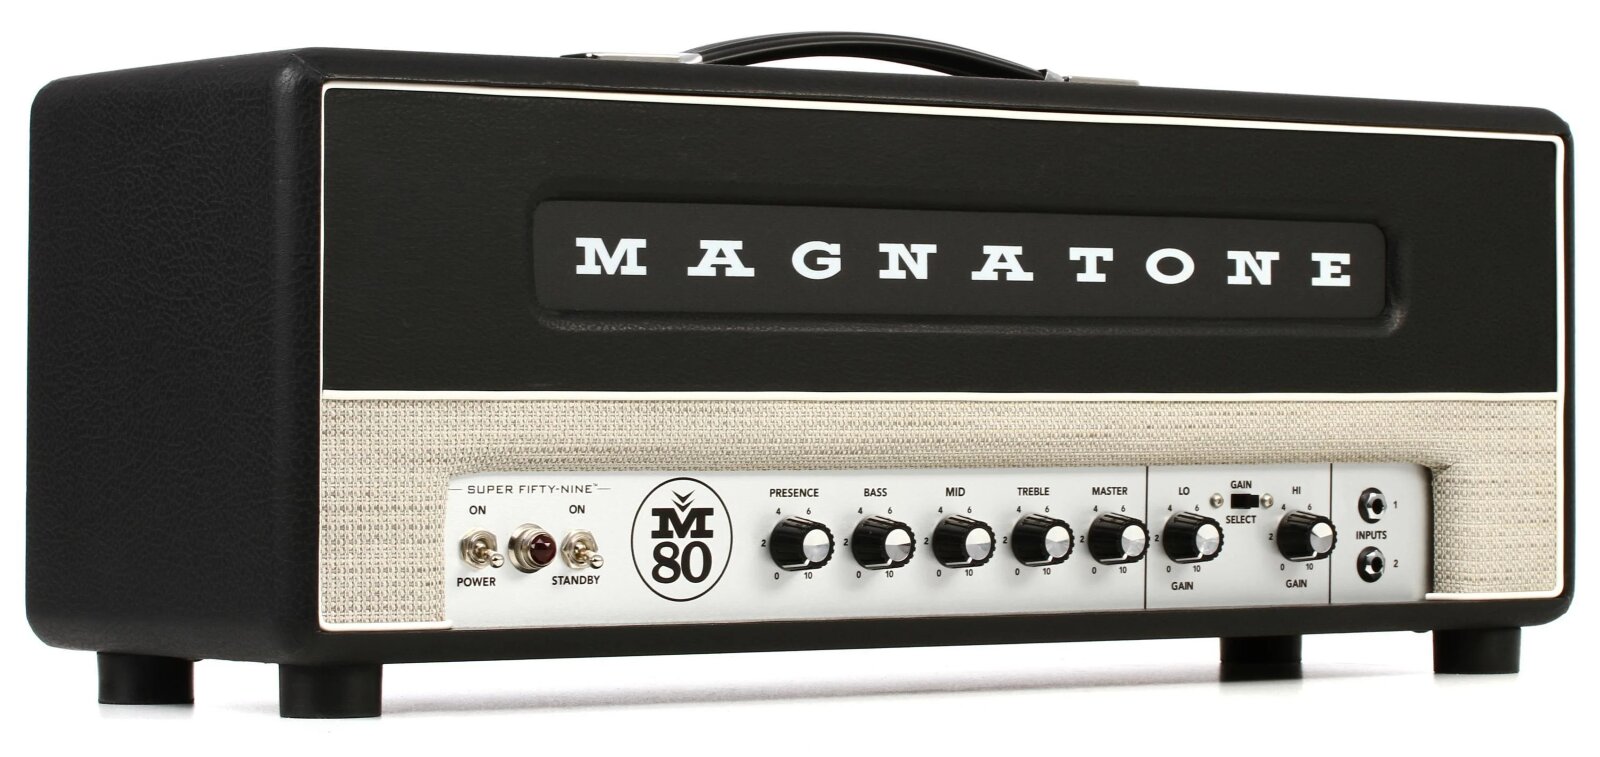 Magnatone Super Fifty-Nine M-80 Head - Black : photo 1